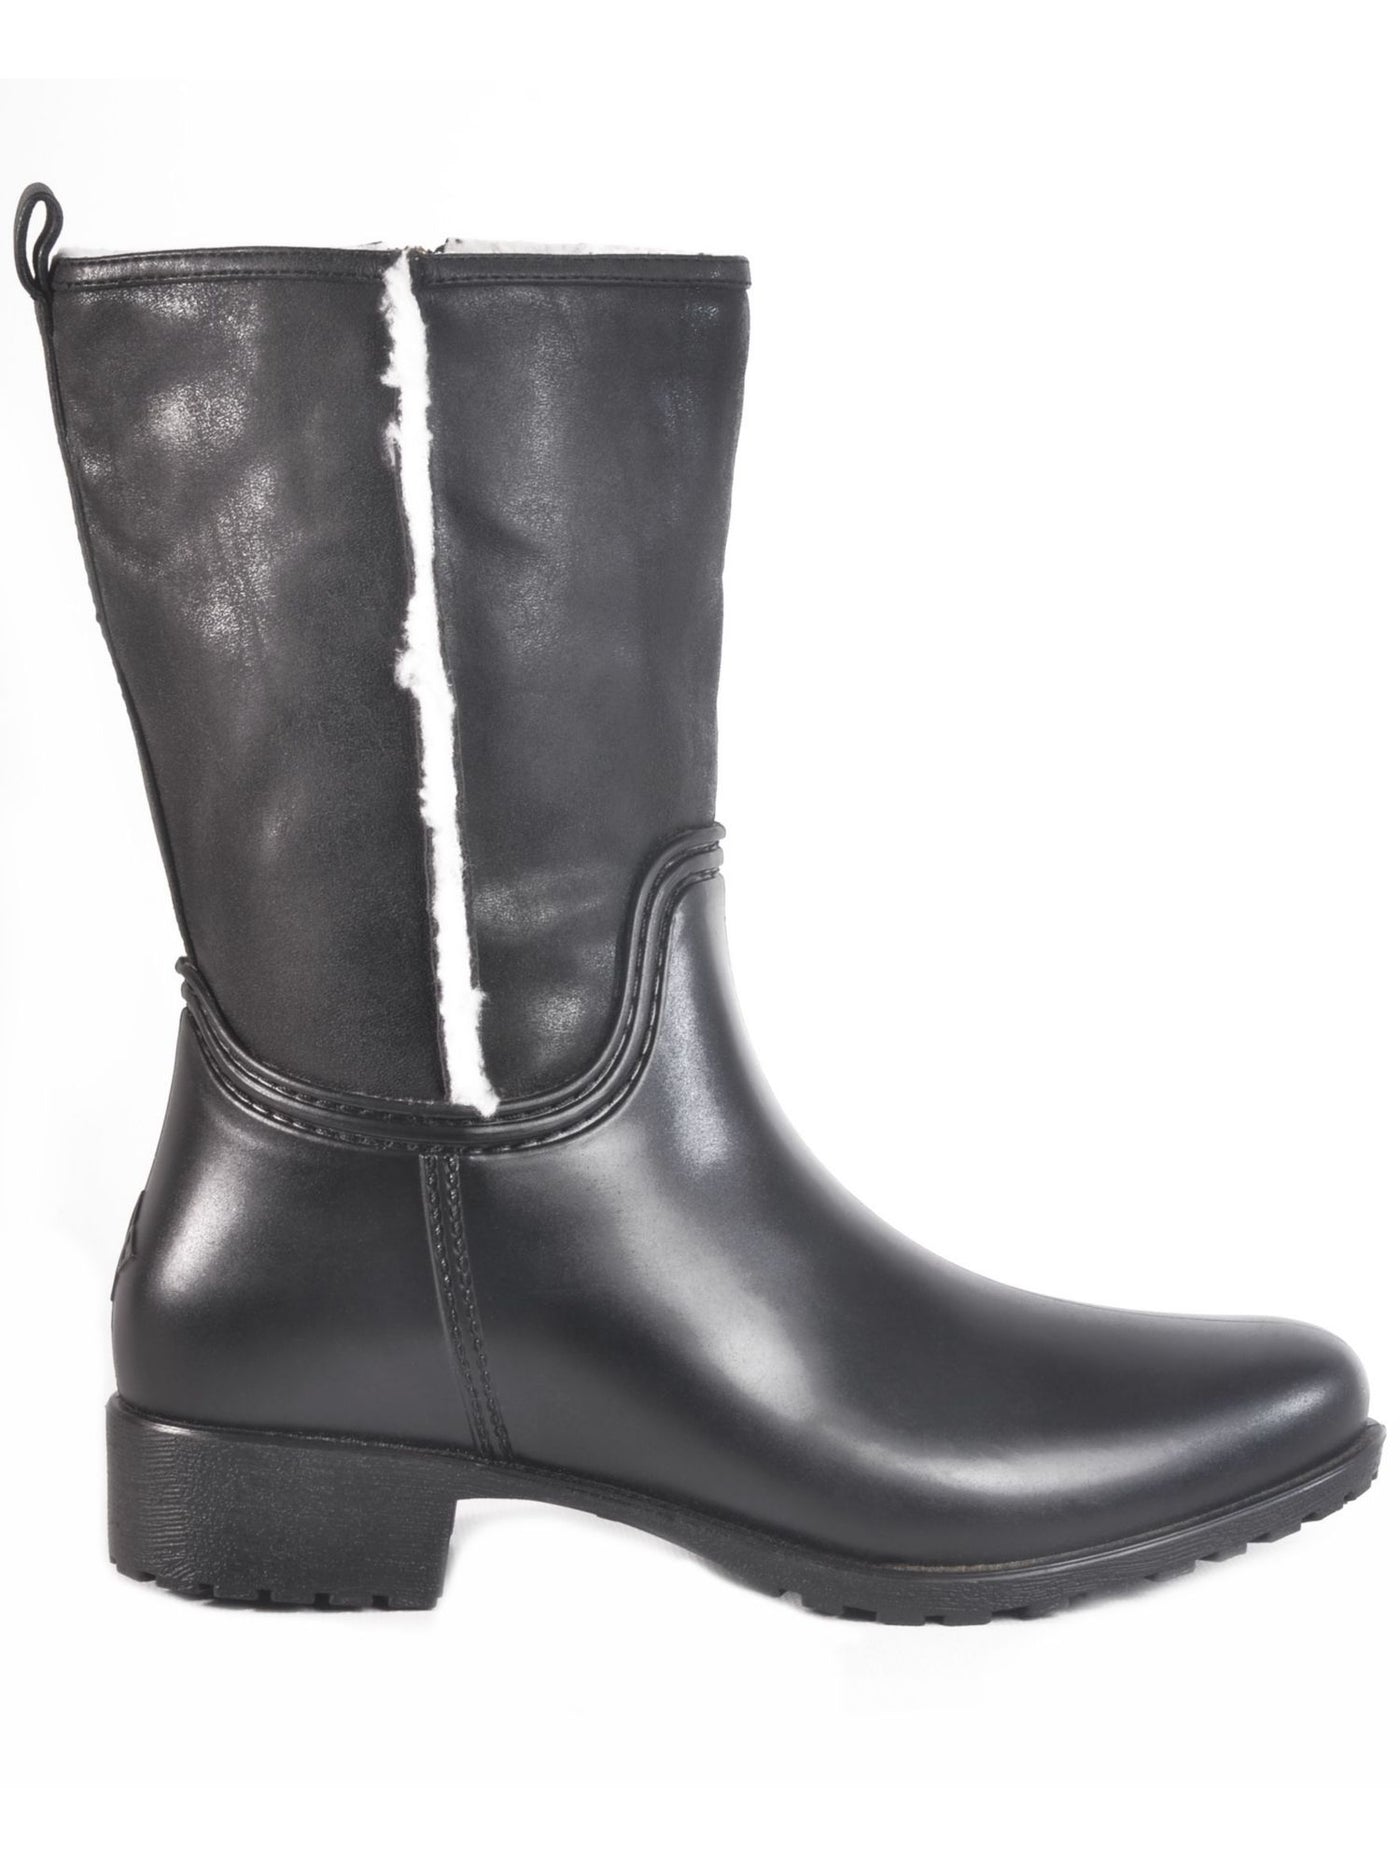 DAV Womens Black Distressed Water Resistant Waterproof Cheyenne Round Toe Block Heel Zip-Up Rain Boots 11